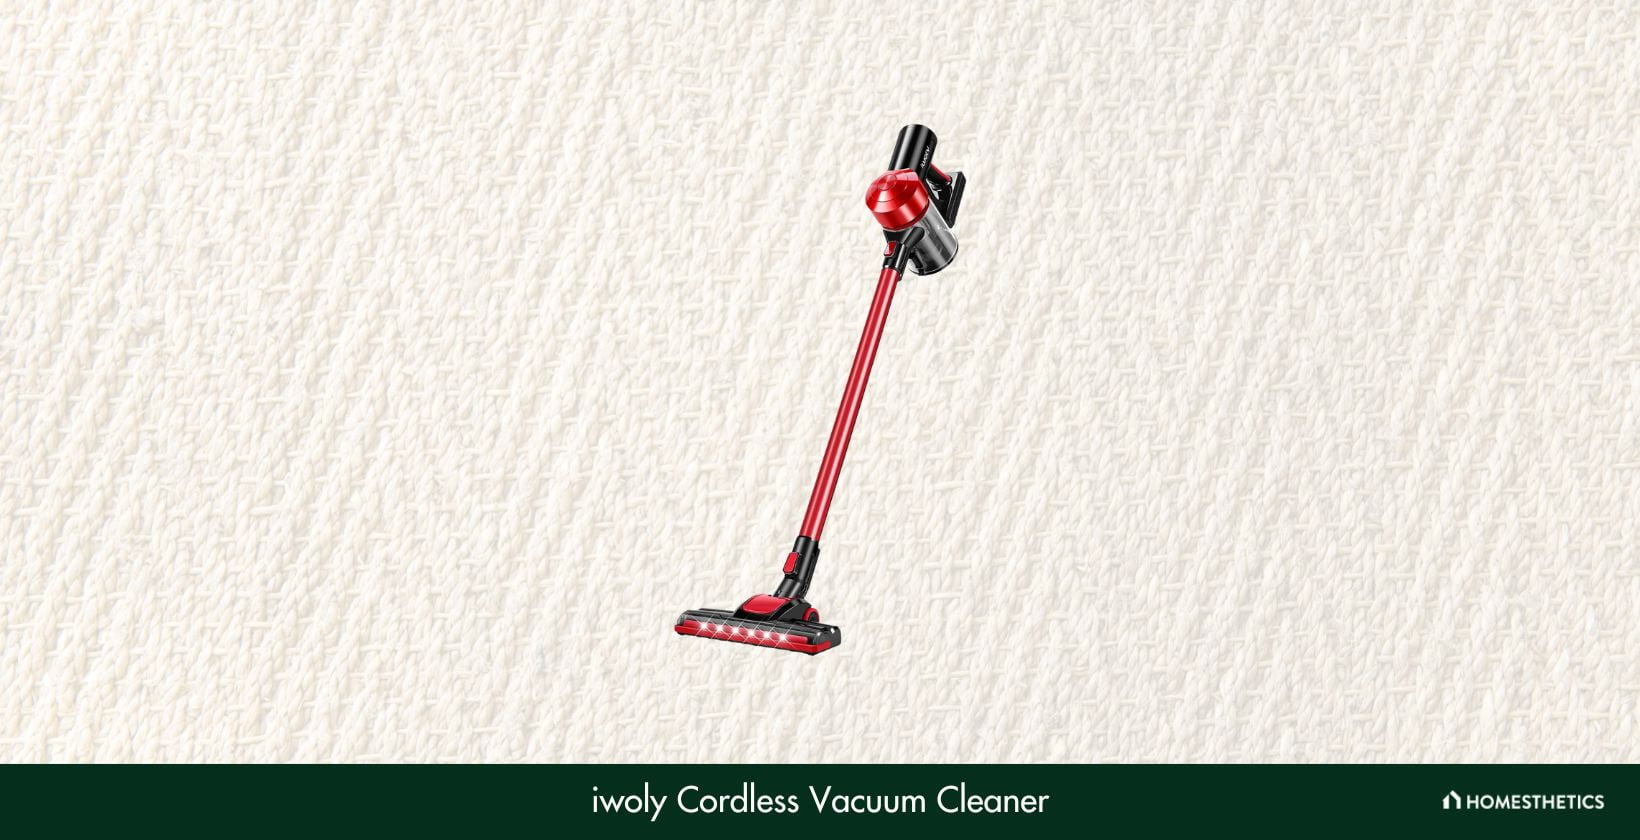 iwoly Cordless Vacuum Cleaner